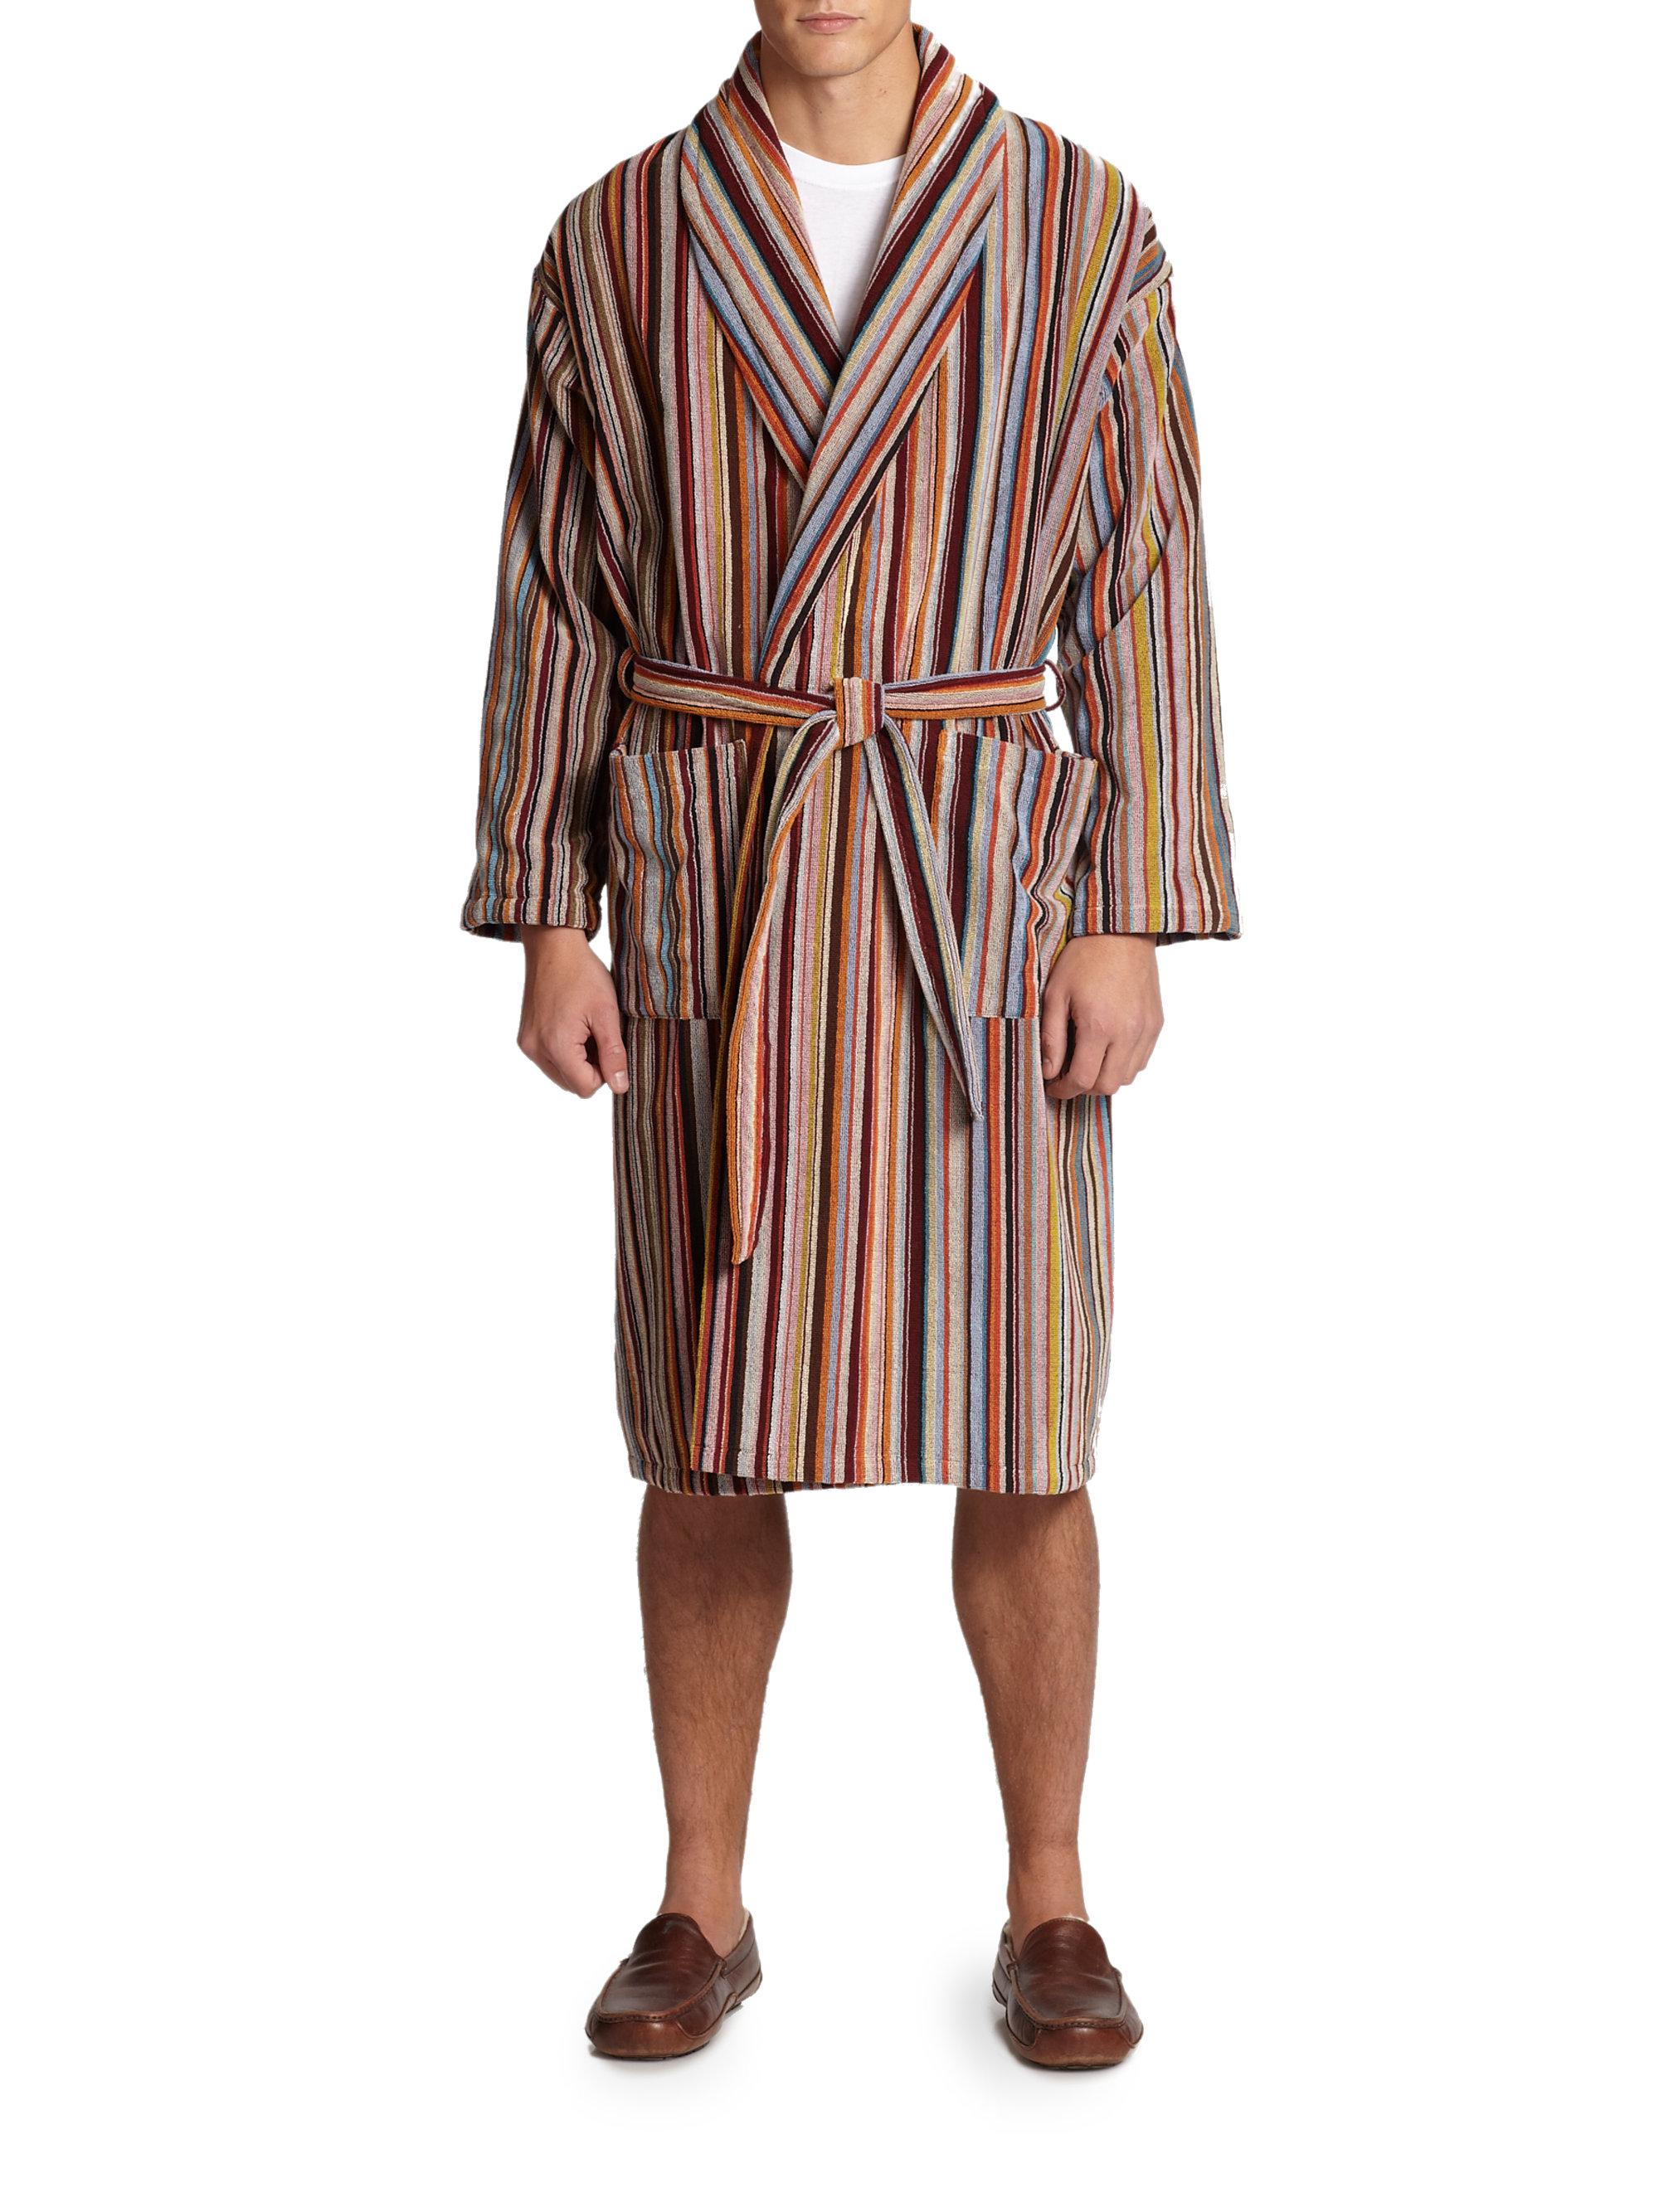 Lyst - Paul Smith Multi-striped Robe for Men